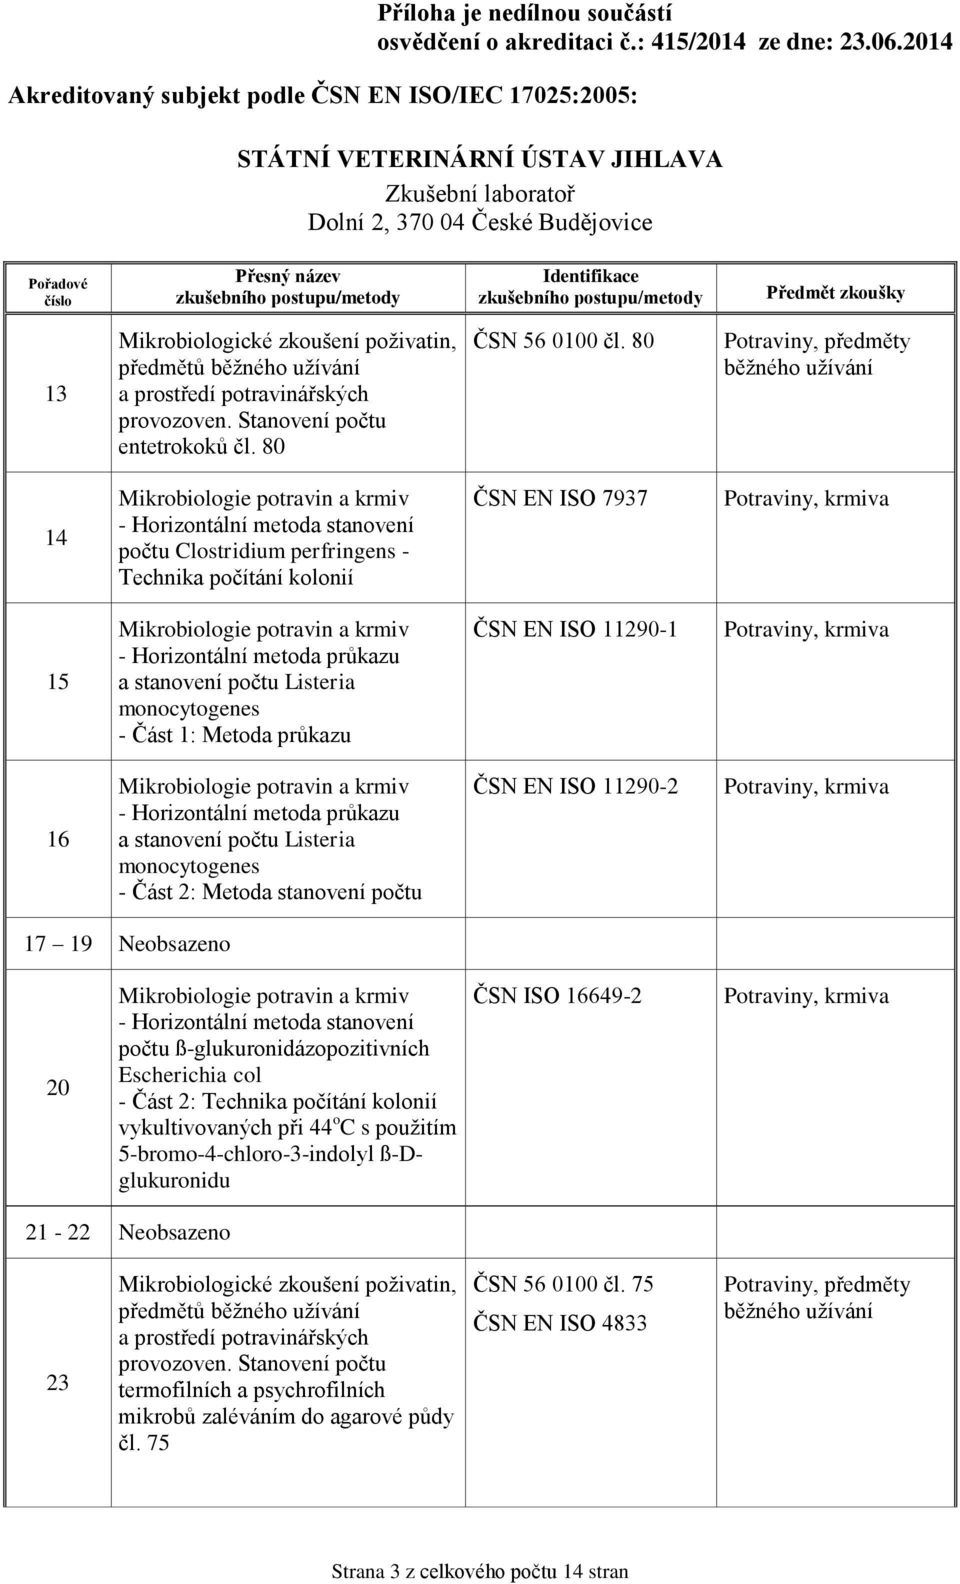 Metoda průkazu ČSN EN ISO 11290-1 16 - Horizontální metoda průkazu a stanovení počtu Listeria monocytogenes - Část 2: Metoda stanovení počtu ČSN EN ISO 11290-2 17 19 Neobsazeno 20 počtu